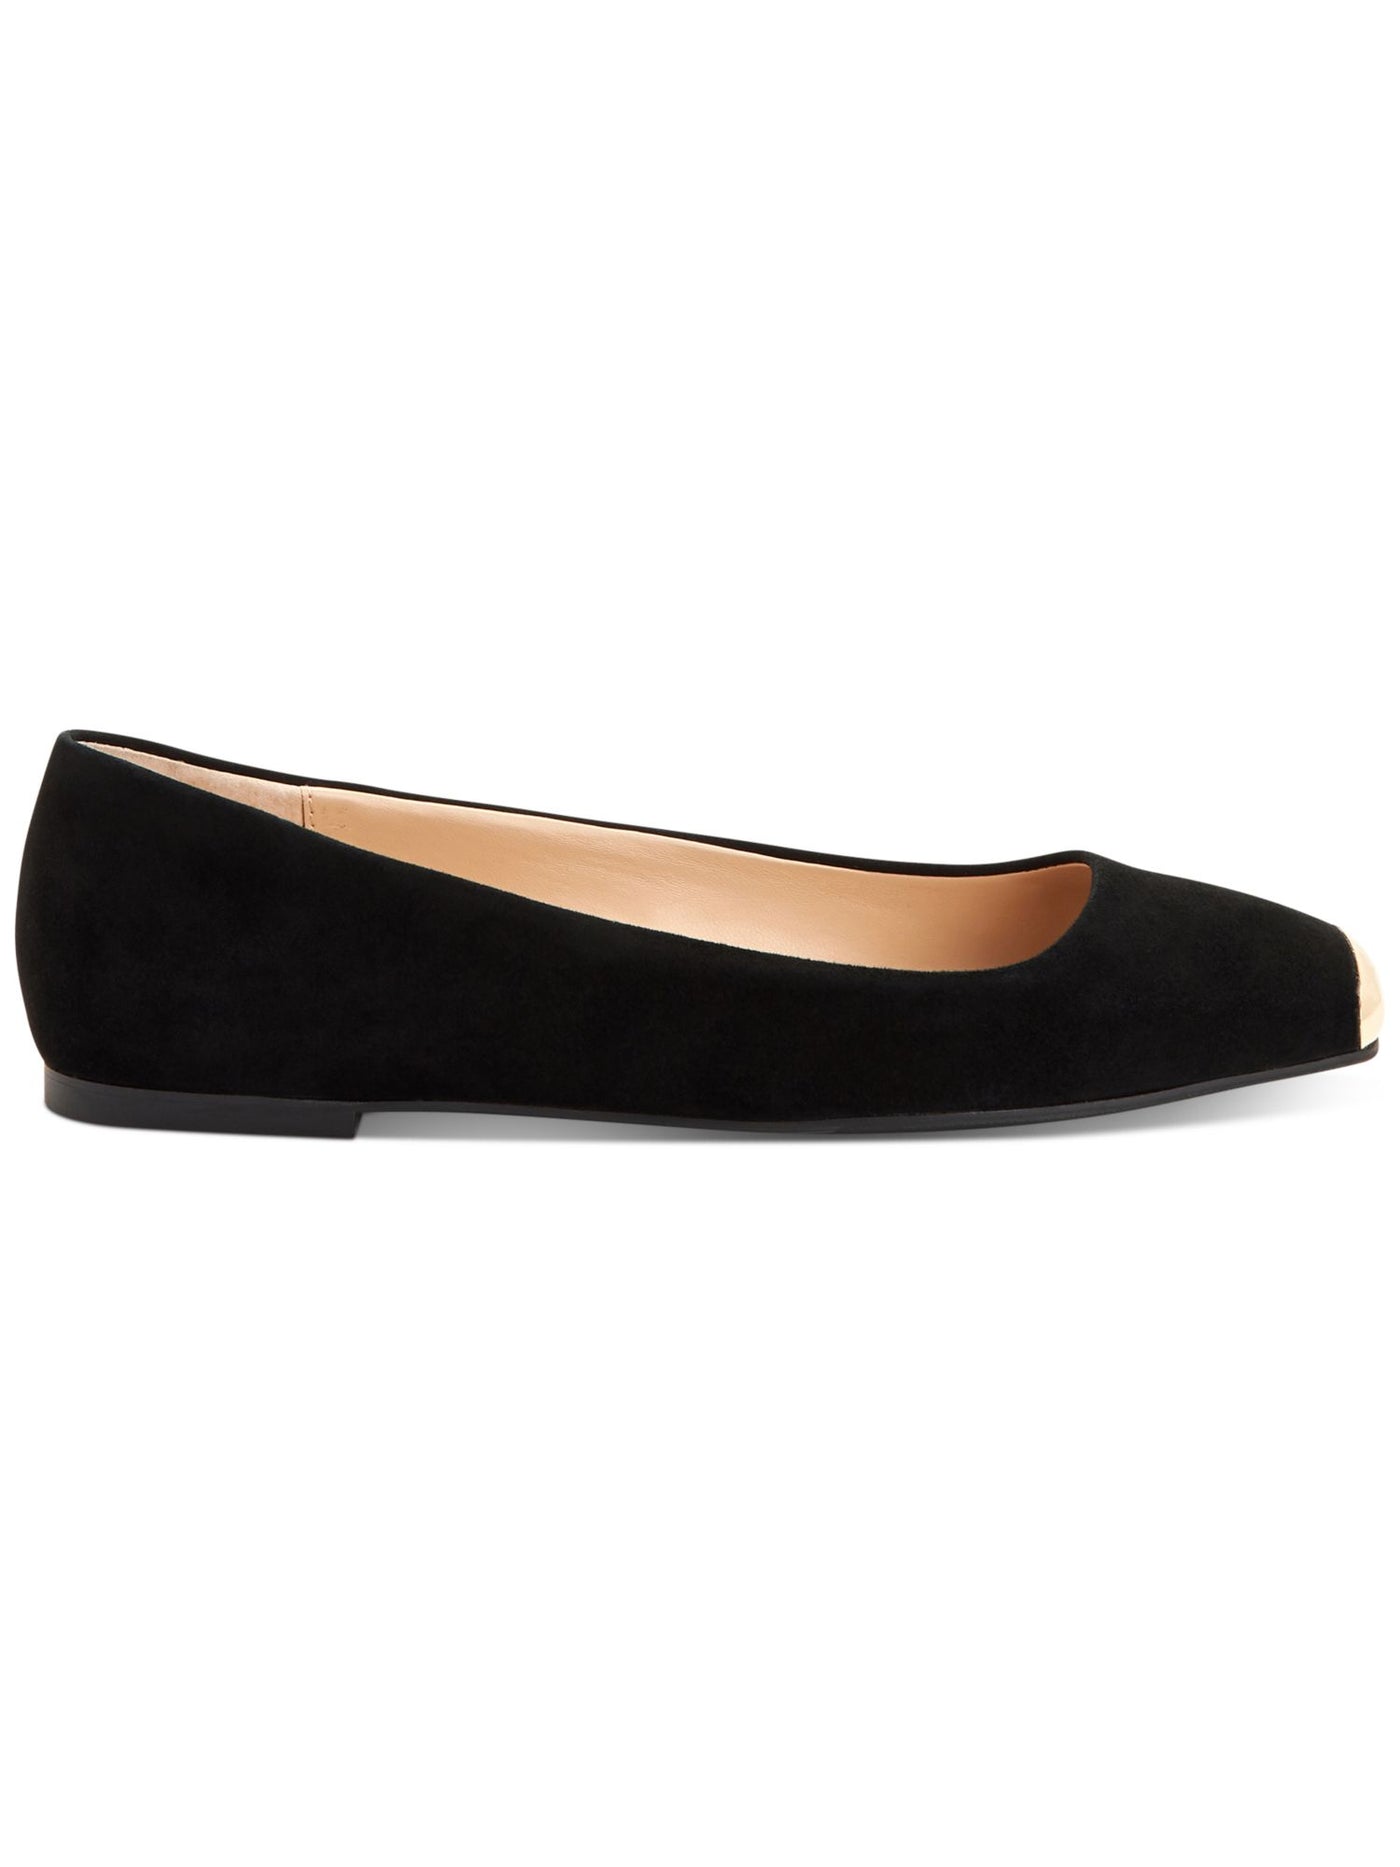 ALFANI Womens Black Toe Plate Padded Neptoon Square Toe Slip On Leather Flats Shoes 12 M